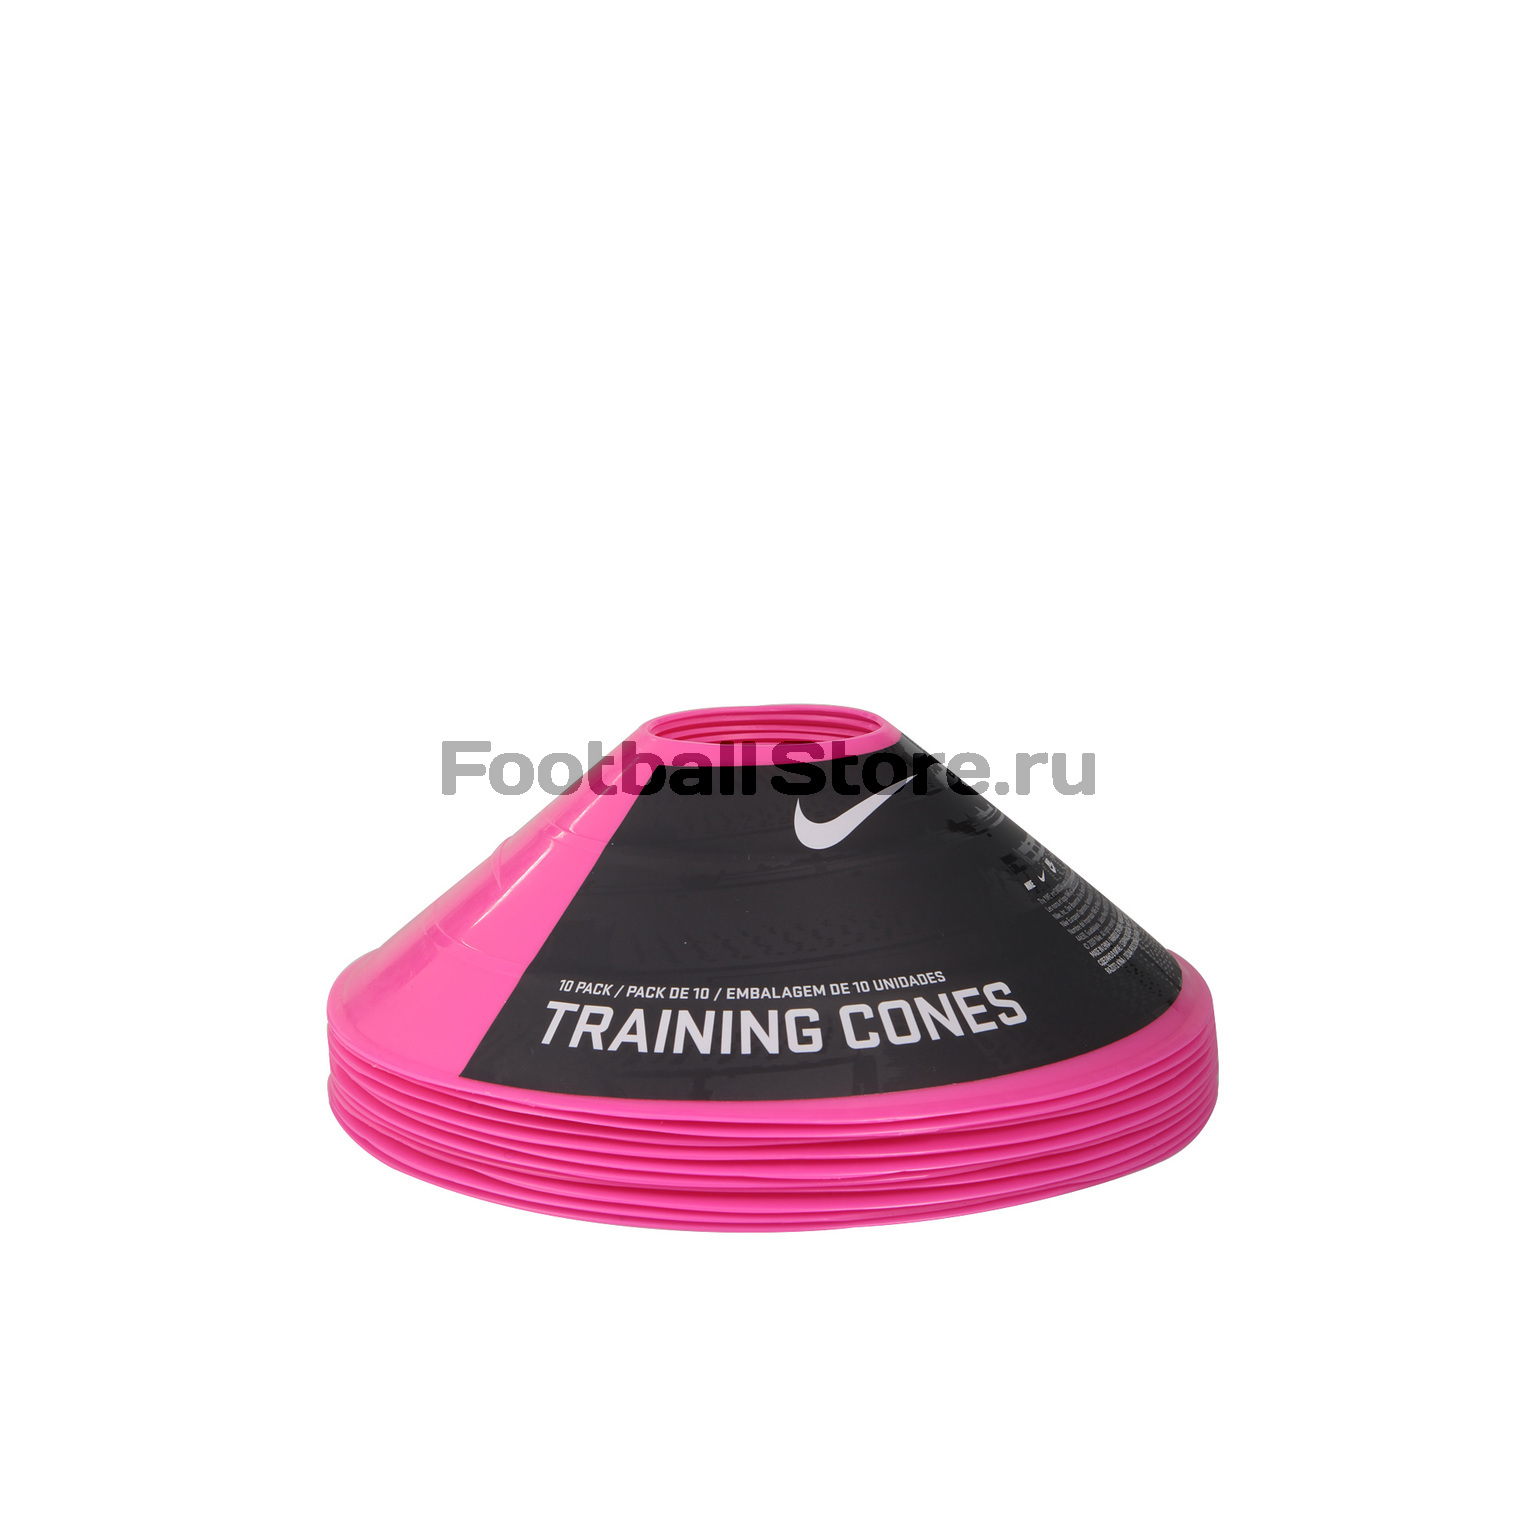 Набор конусов для тренировок Nike 10 Pack Training Cones N.SR.08.679.NS